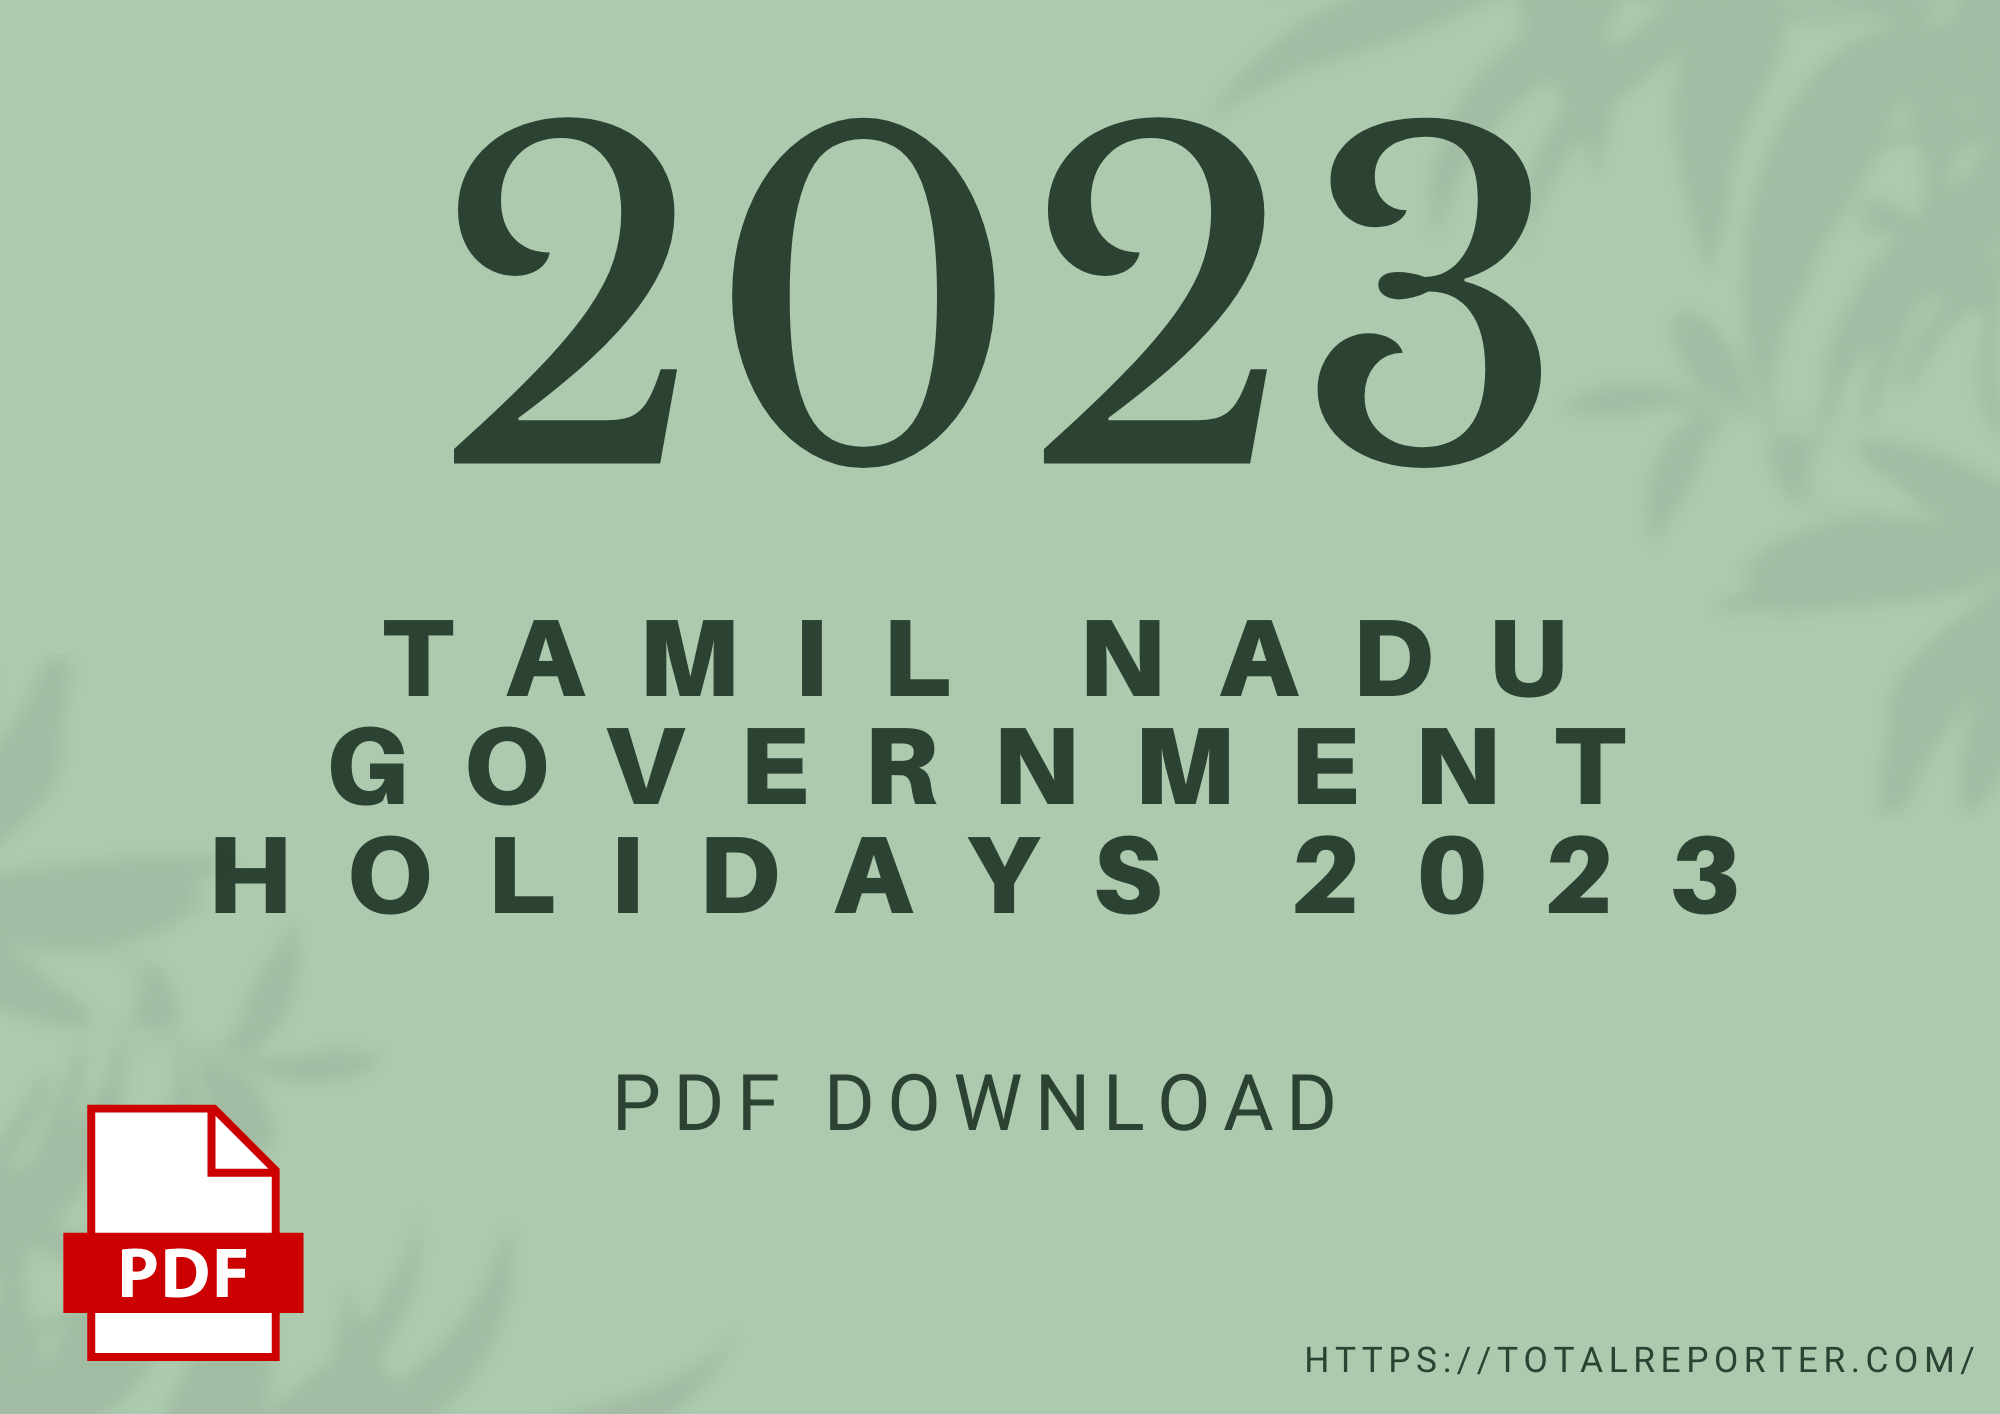 TN Gov Holidays 2023 PDF download